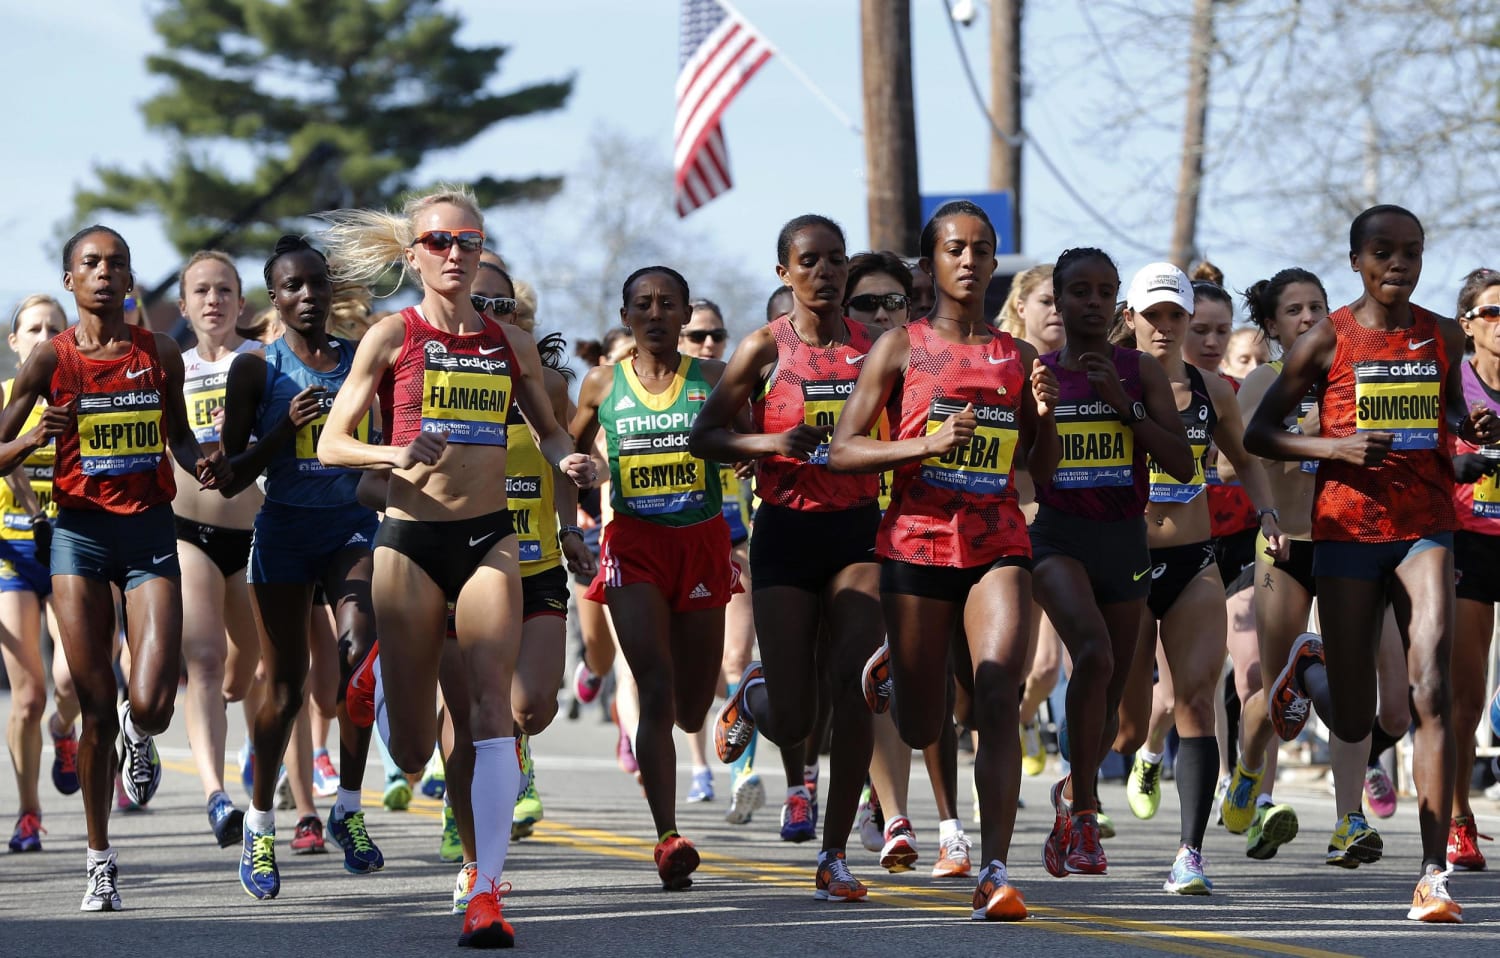 Elite Women Runners Start Boston Marathon - NBC News.com